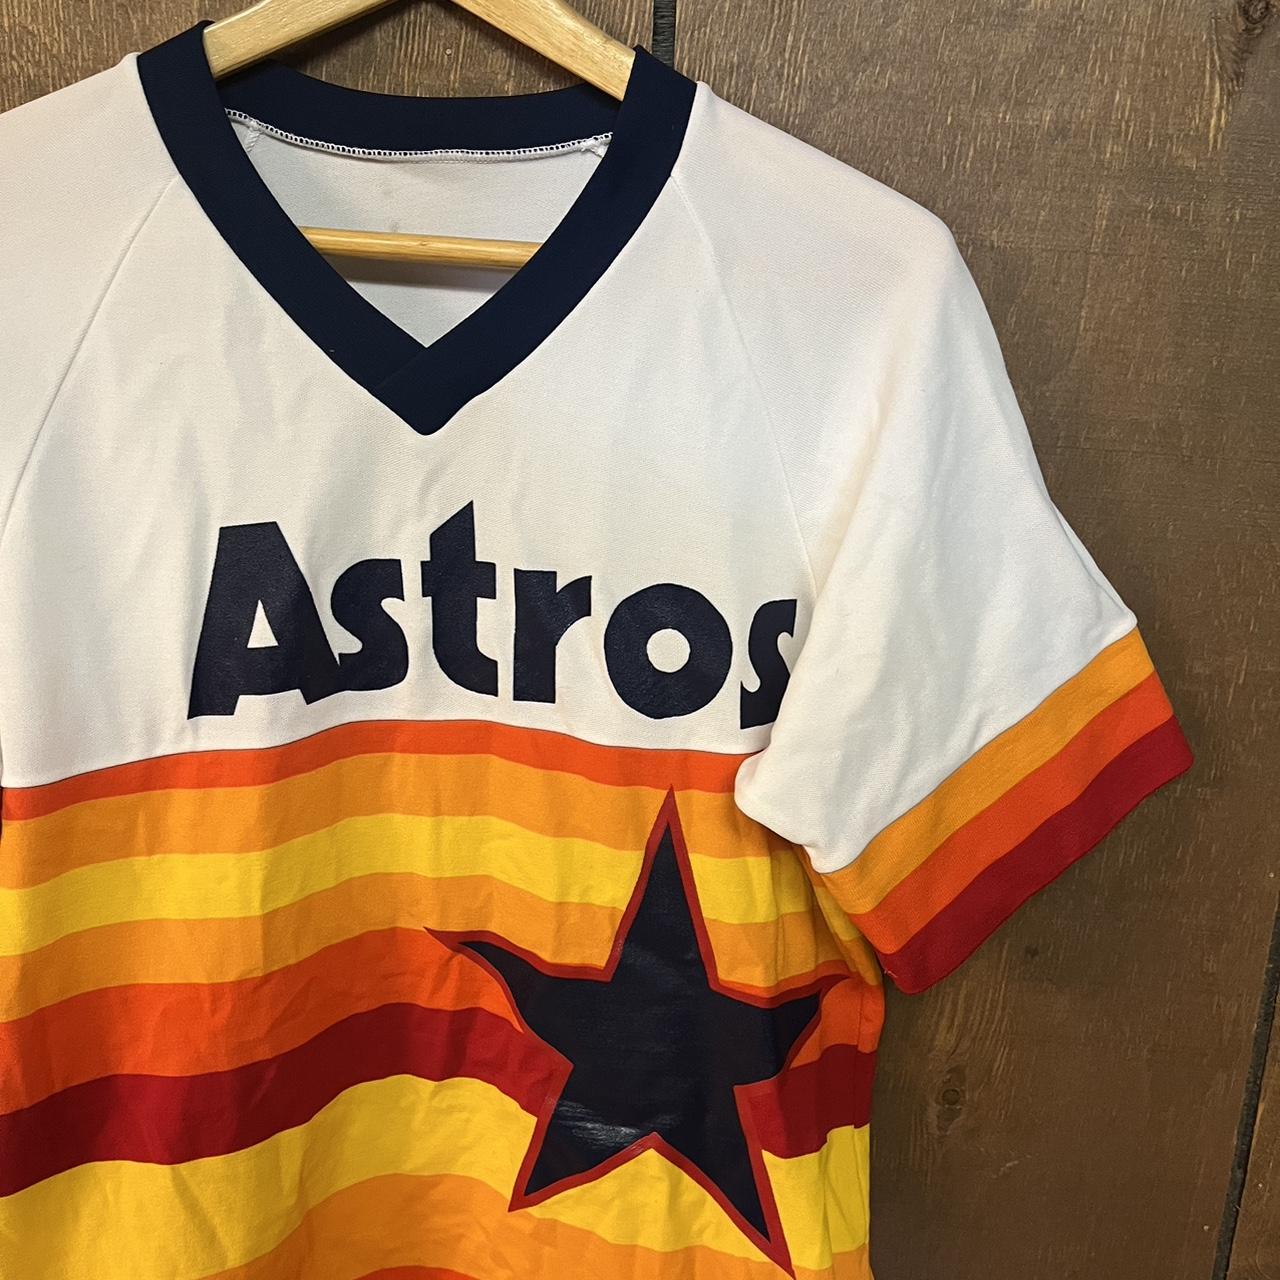 VINTAGE Houston Astros Rainbow Jersey Adult Medium Sand Knit MLB Mens 1970s